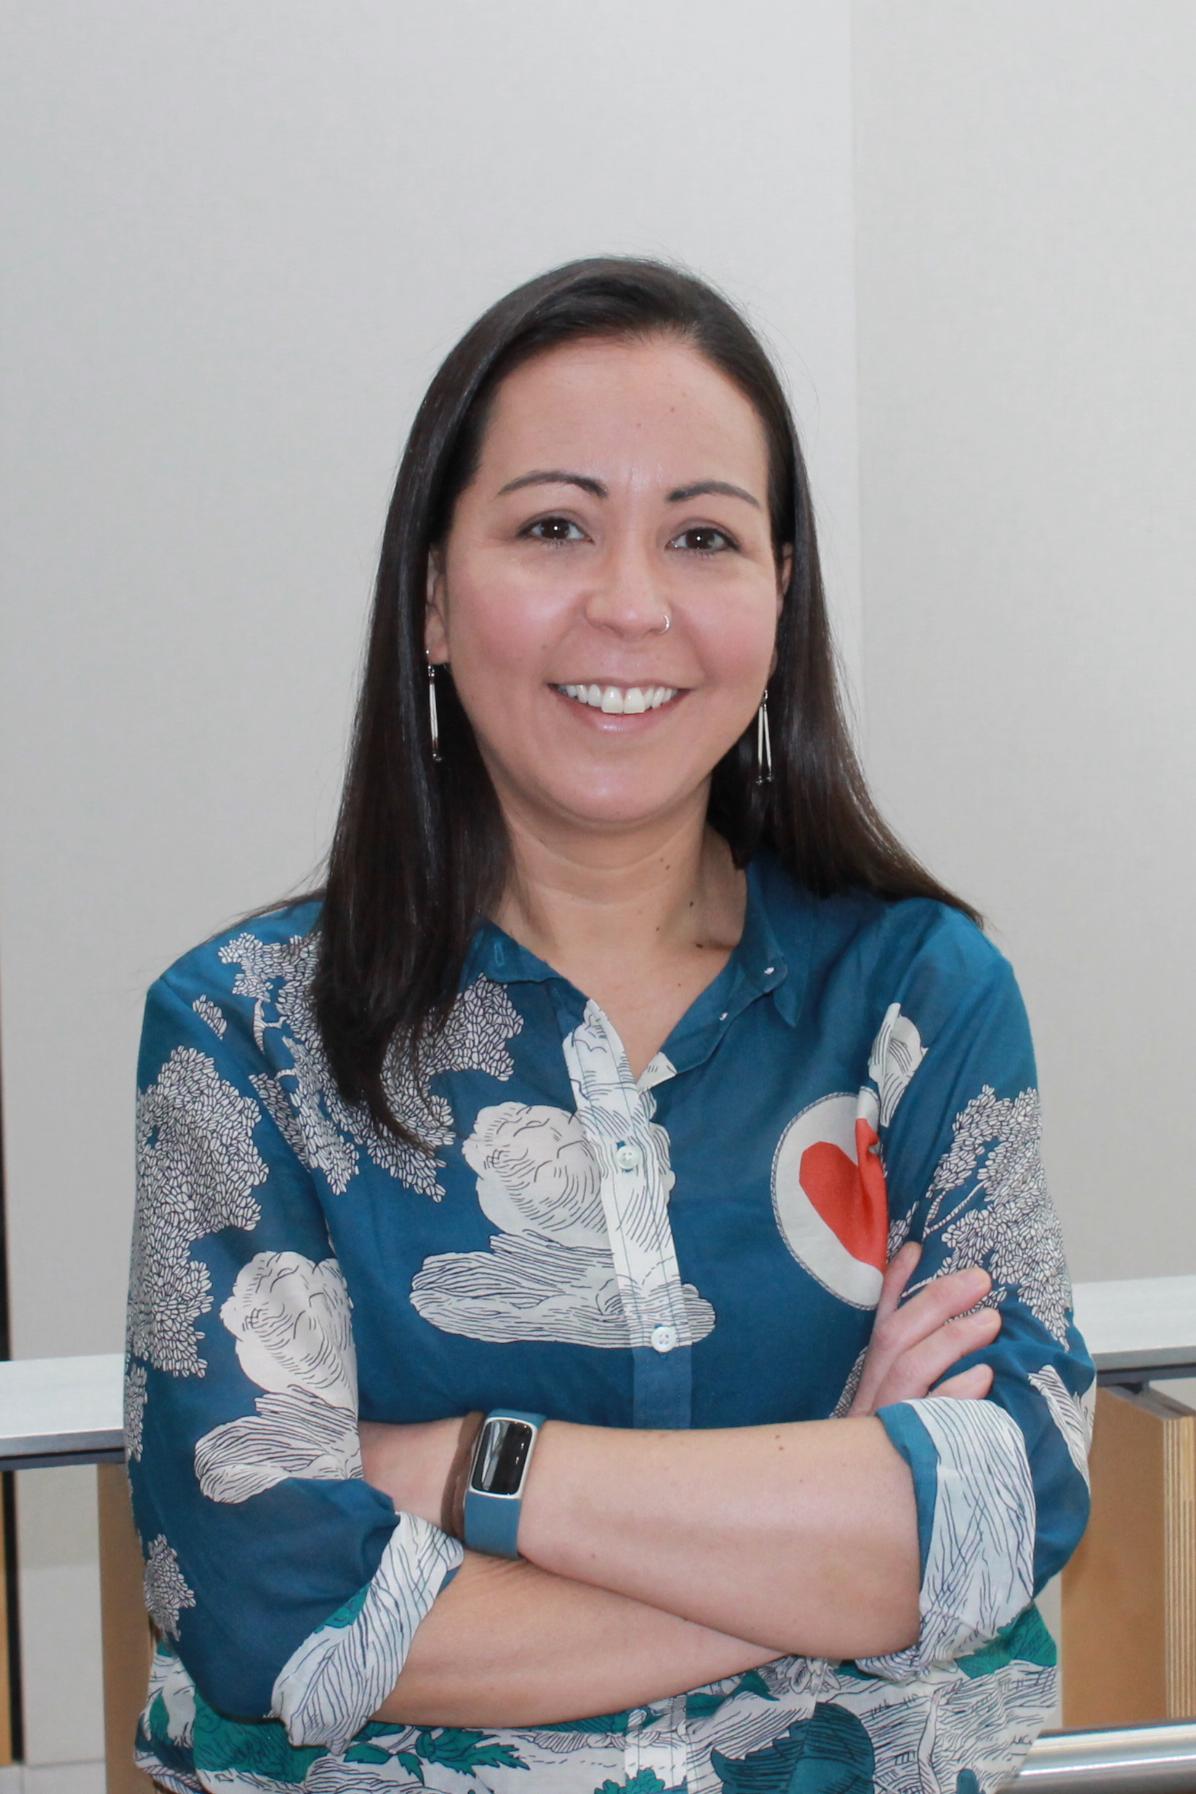 Prof. Dani Kwan-Lafond, a young woman with dark hair wearing a blue shirt